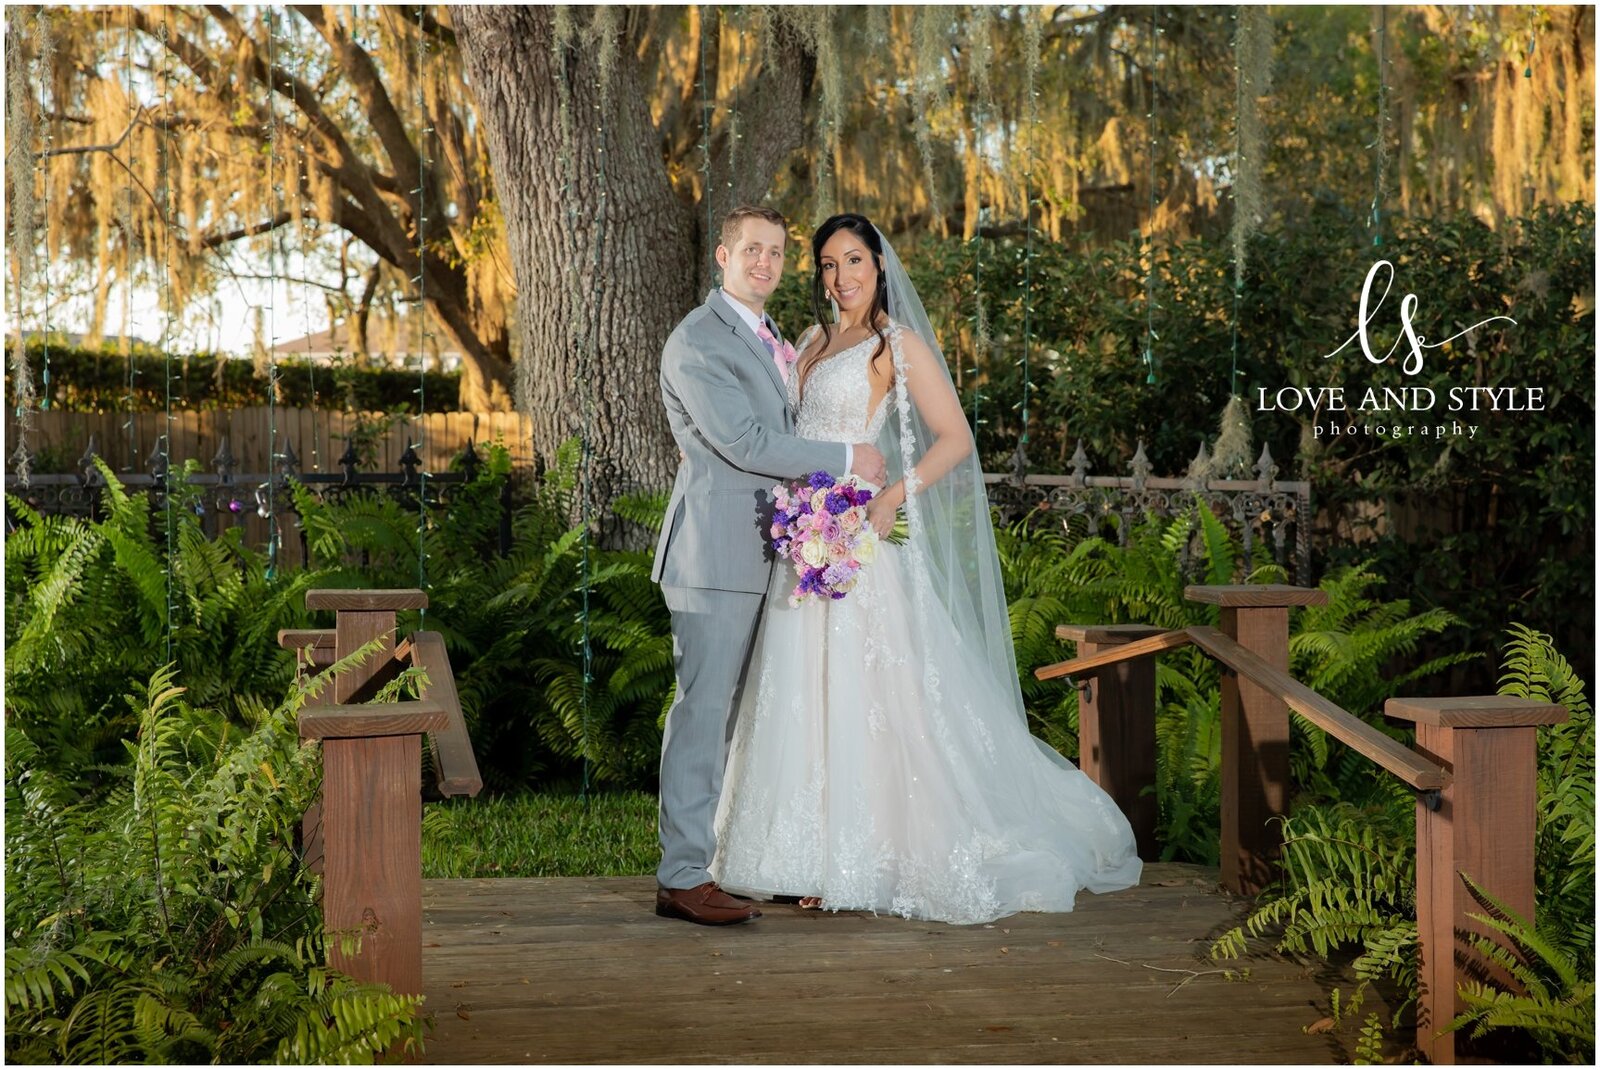 A wedding at Baker's Ranch, Parrish, FL